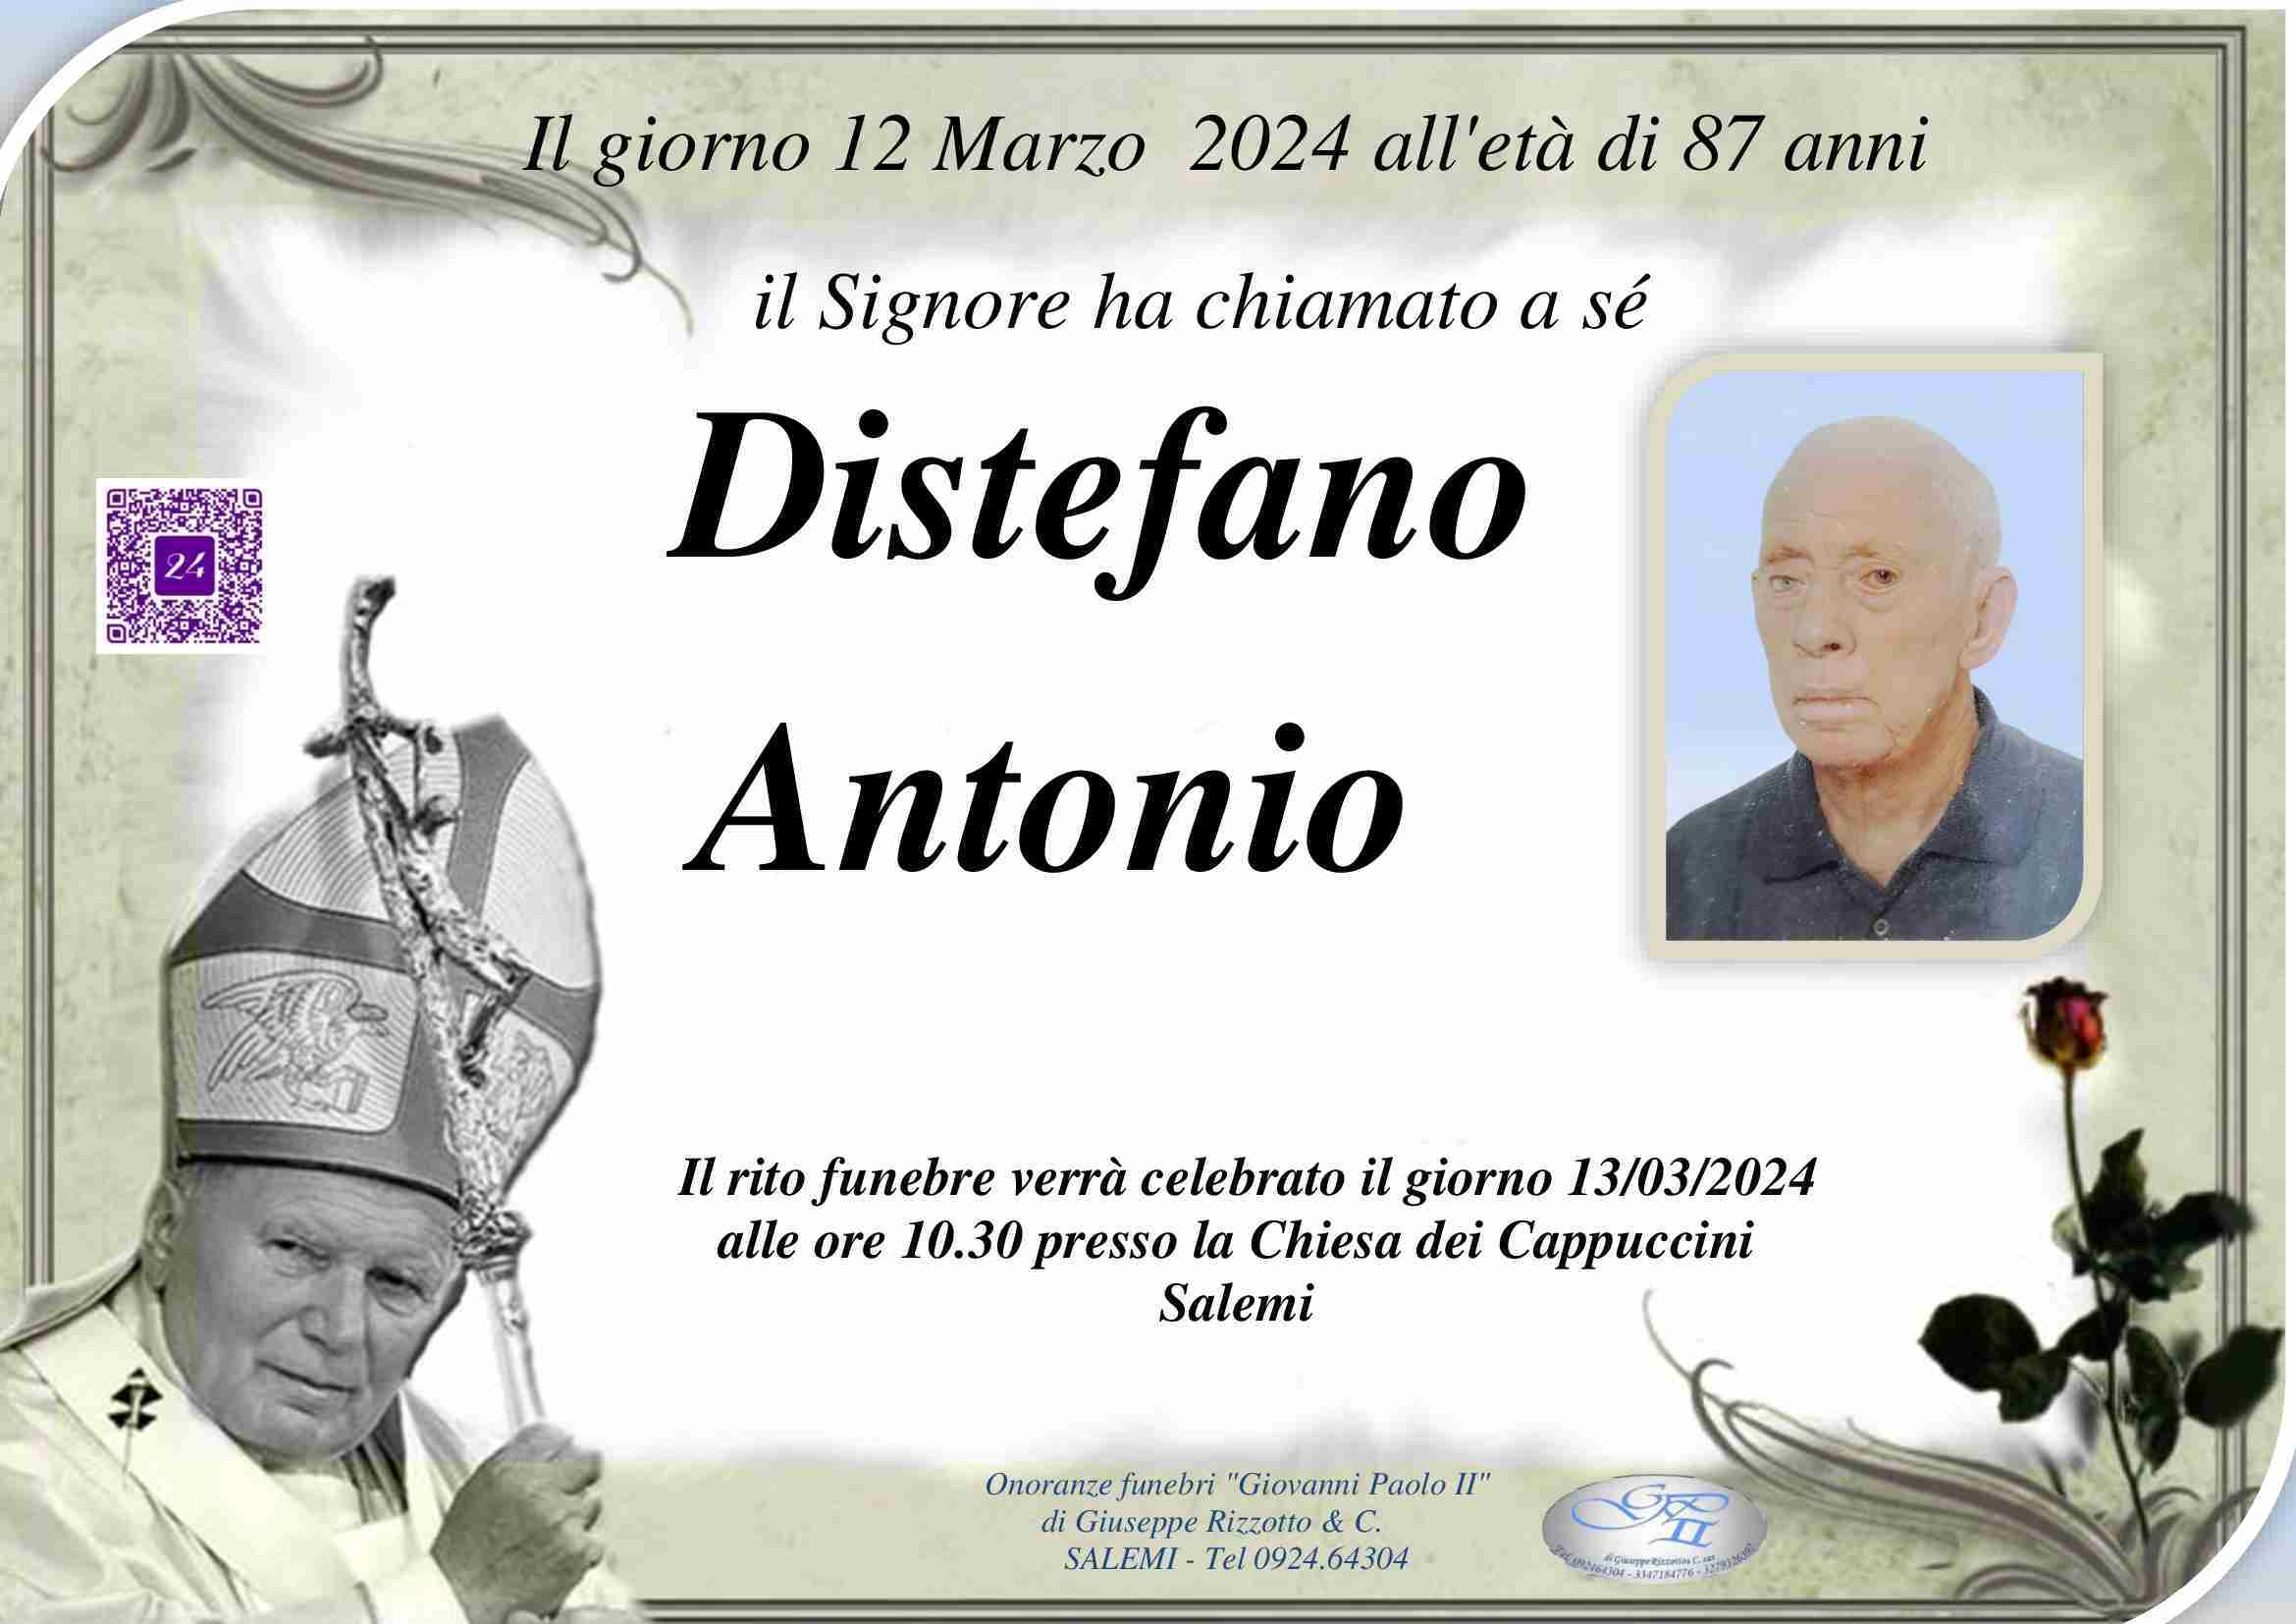 Antonio Distefano